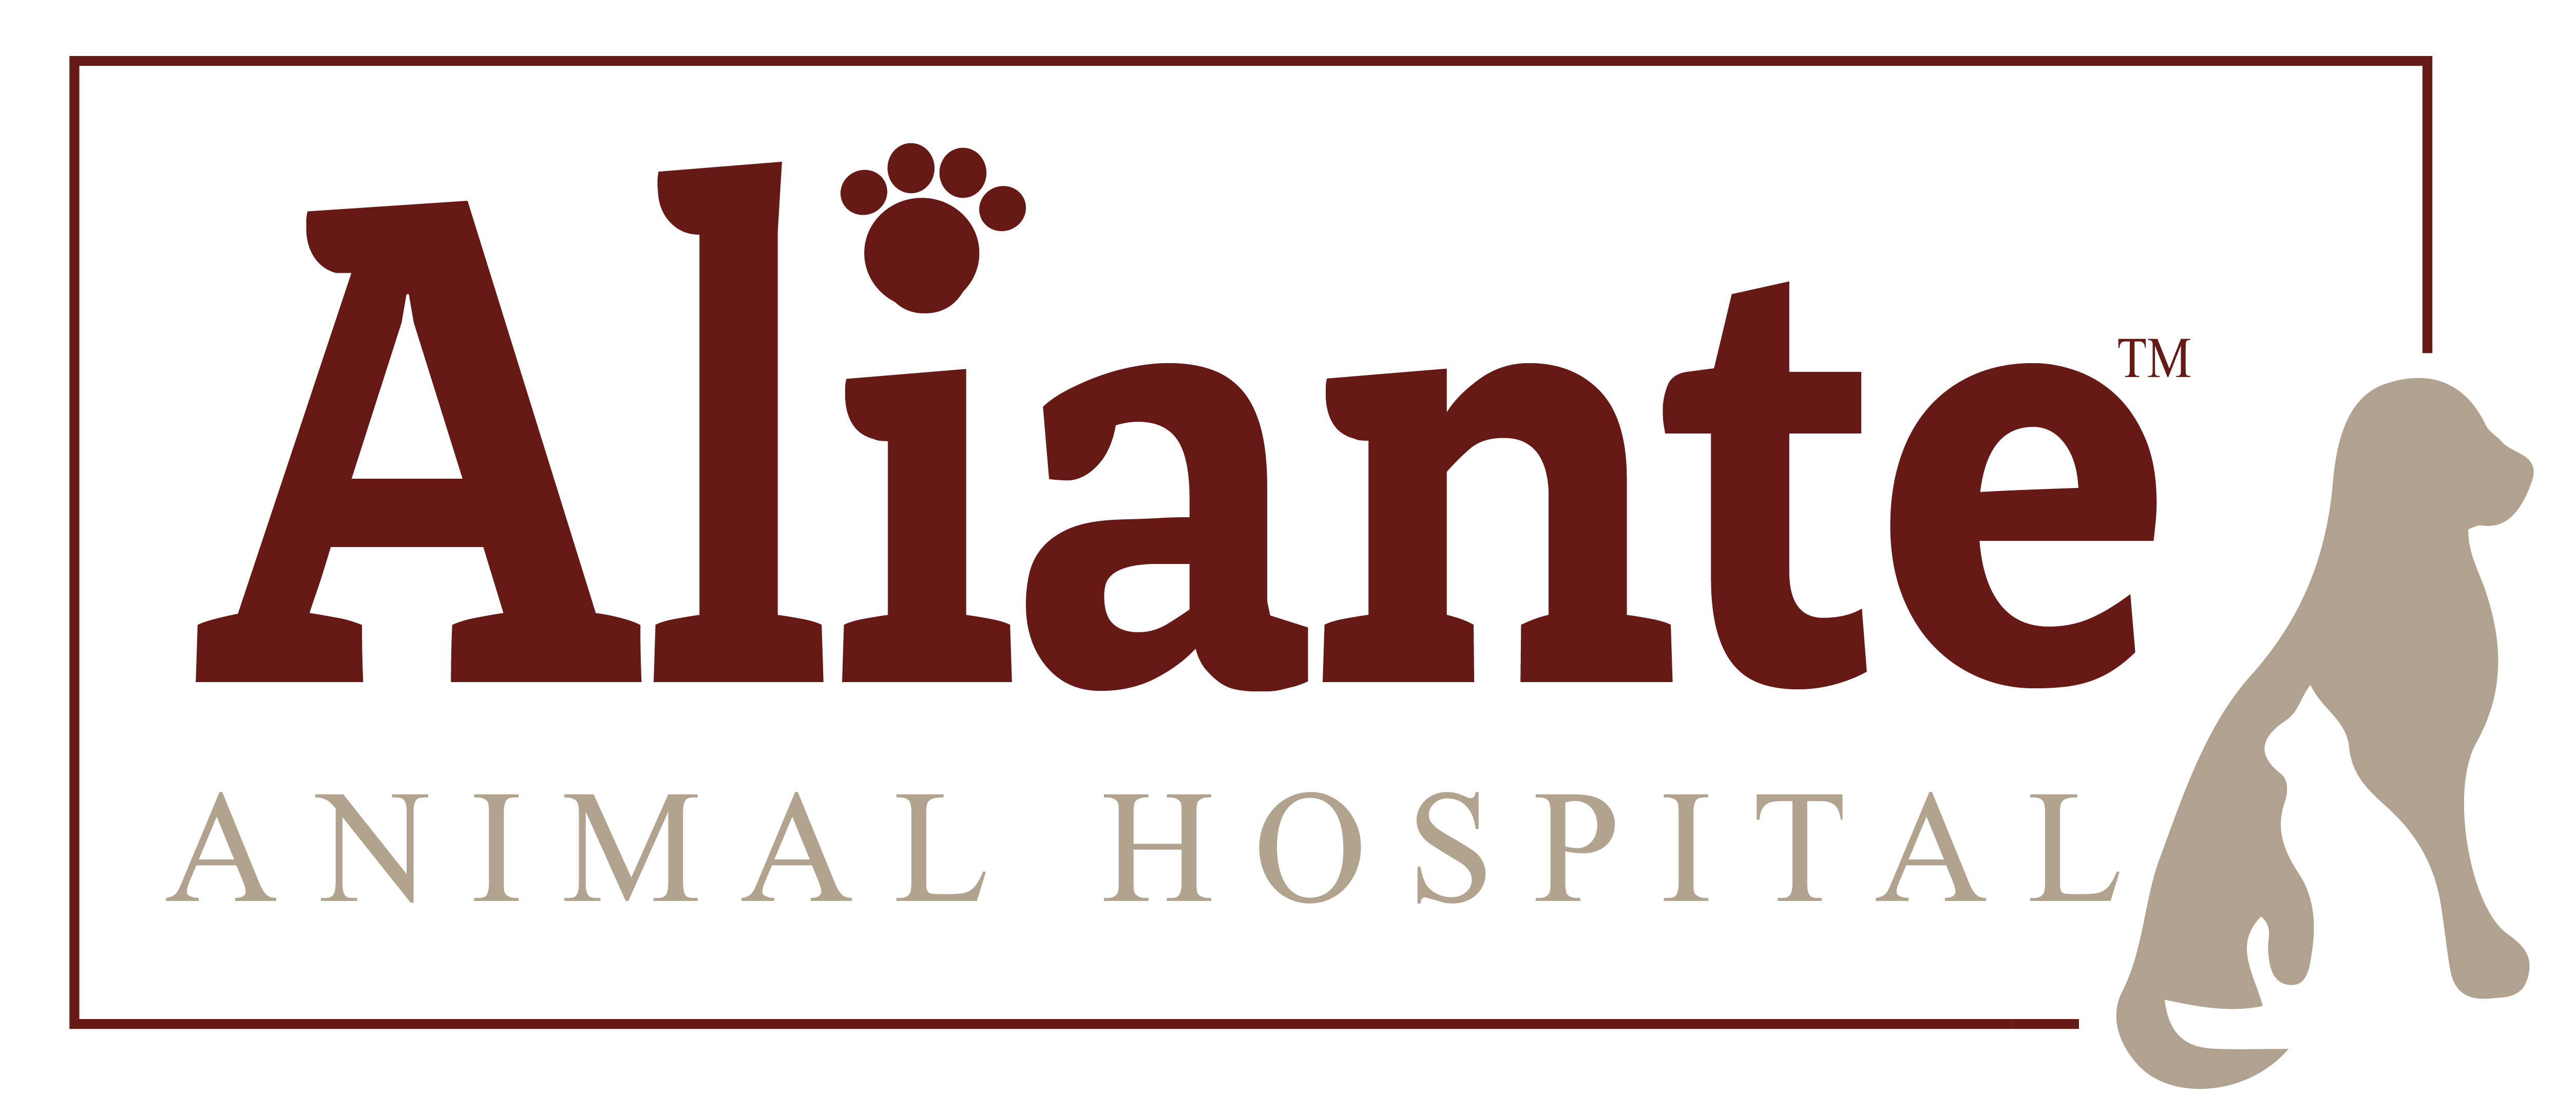 Aliante Animal Hospital